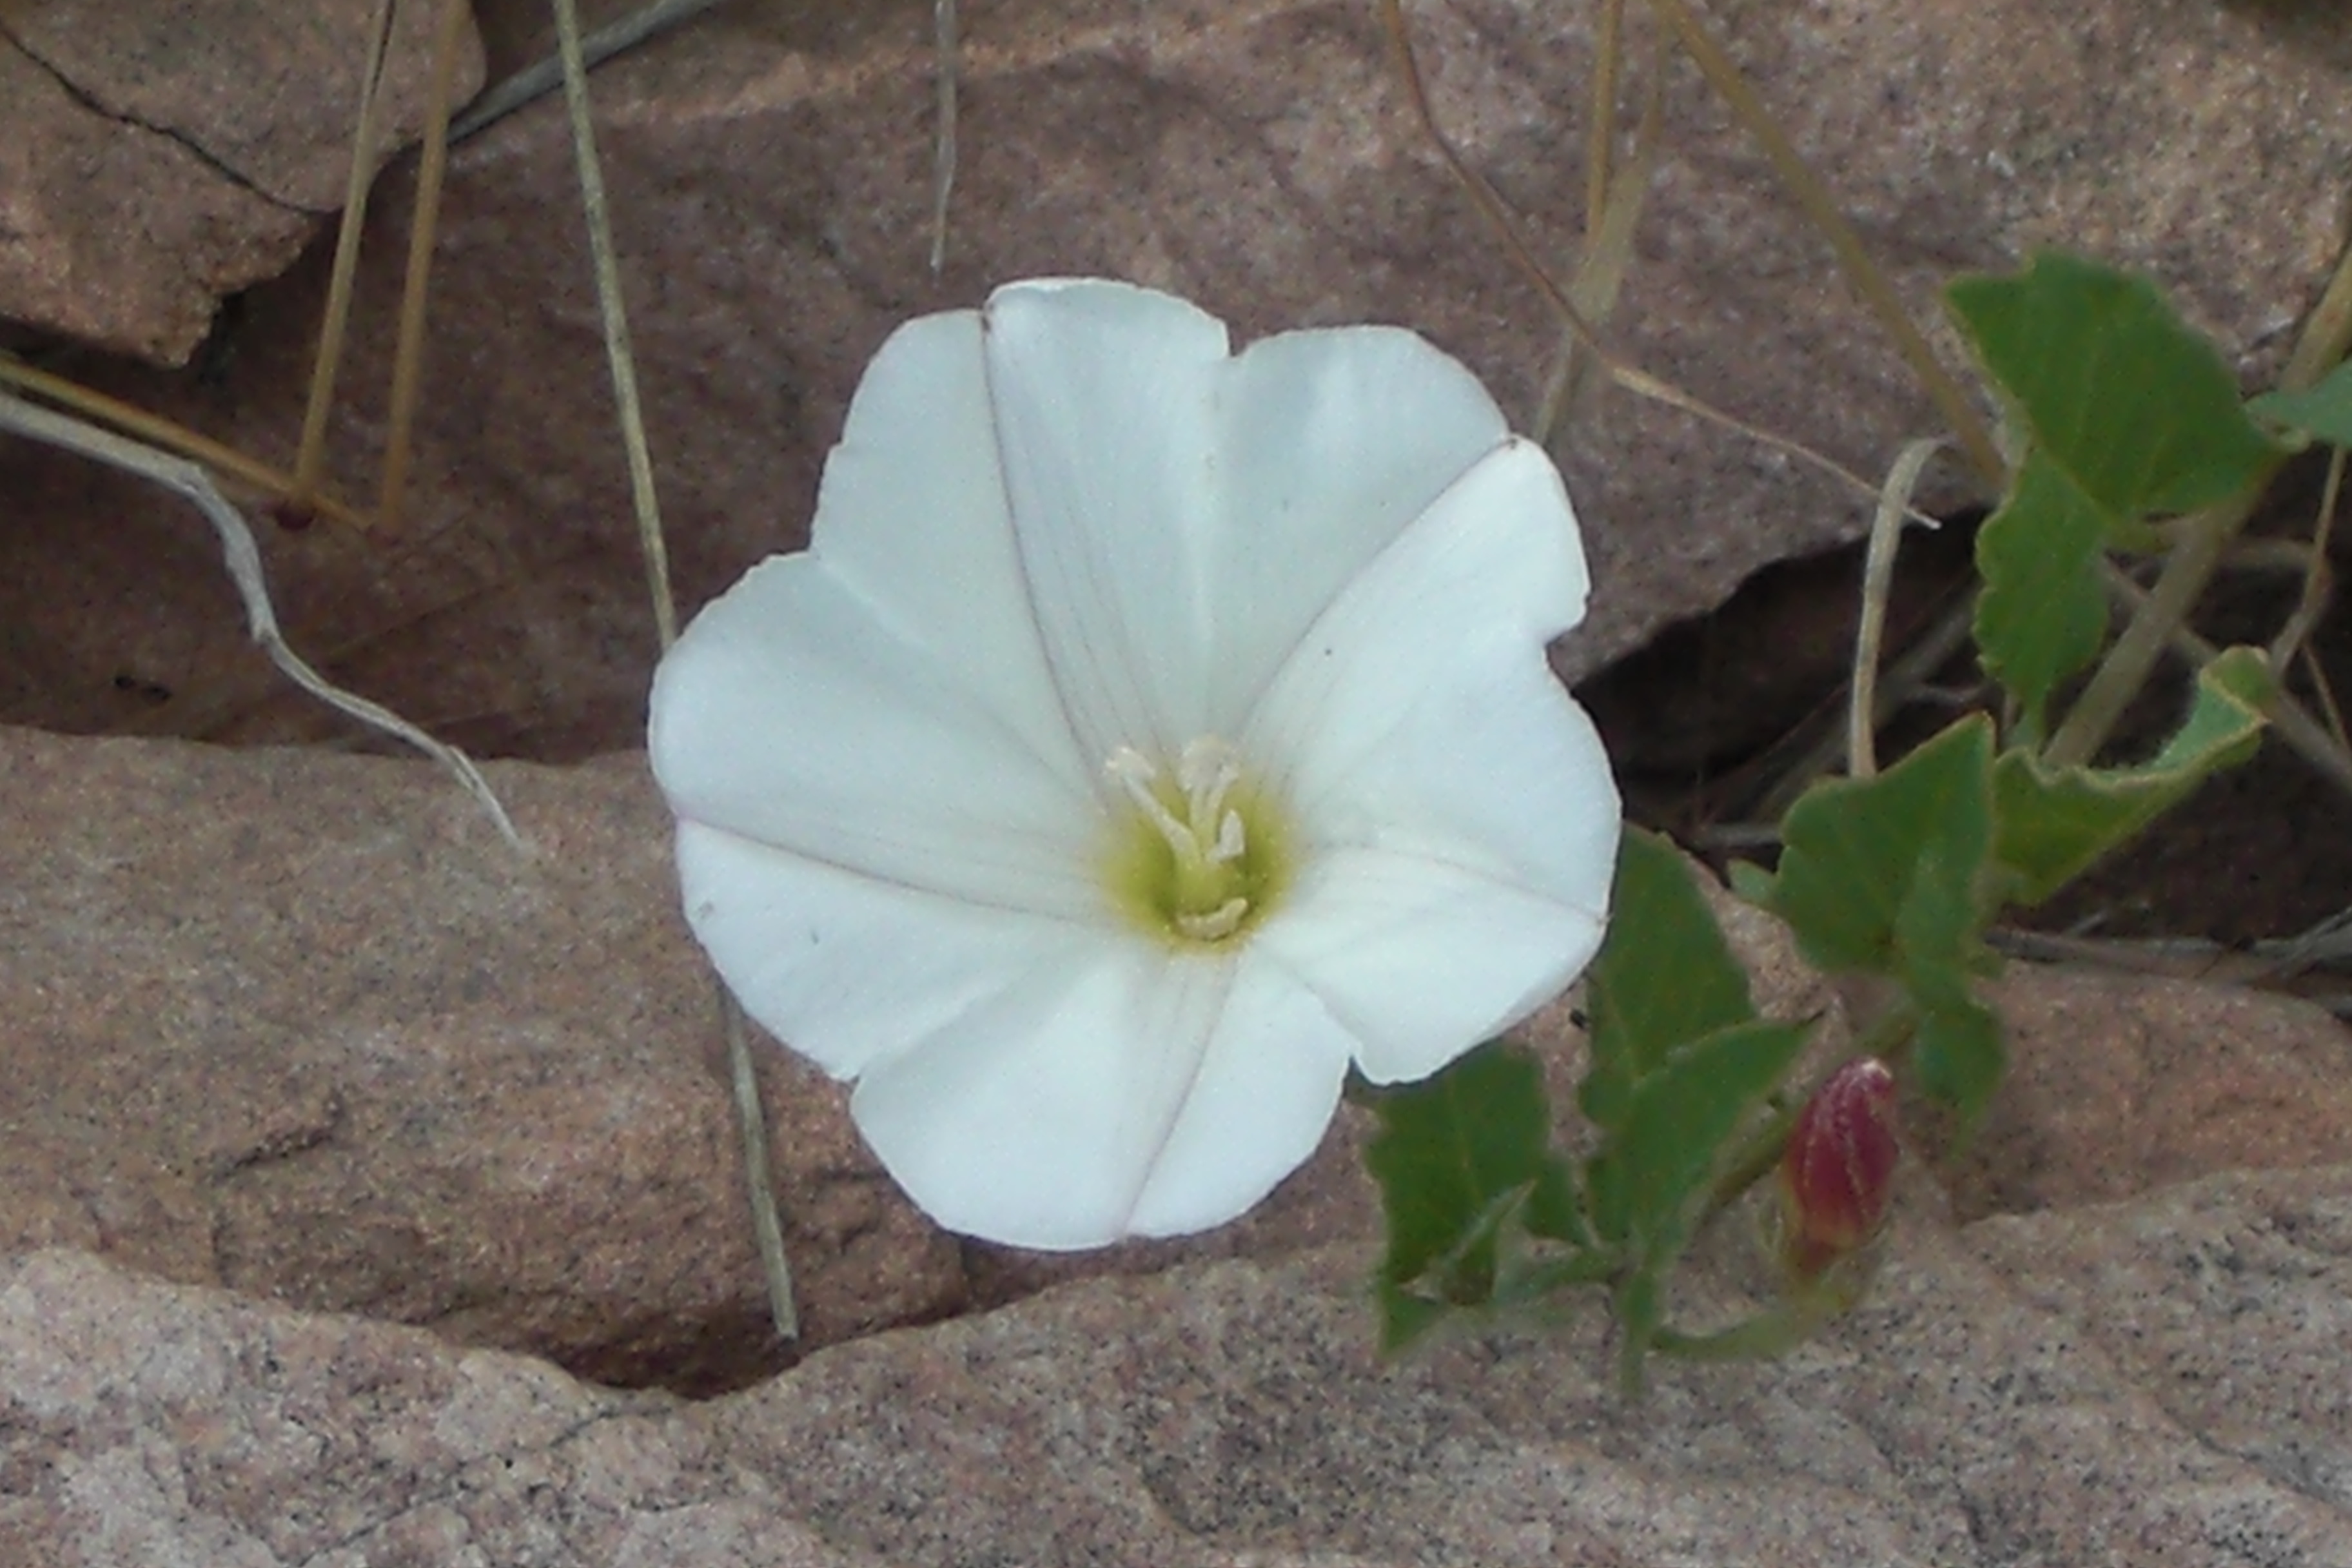 Trumpet-shaped white flower